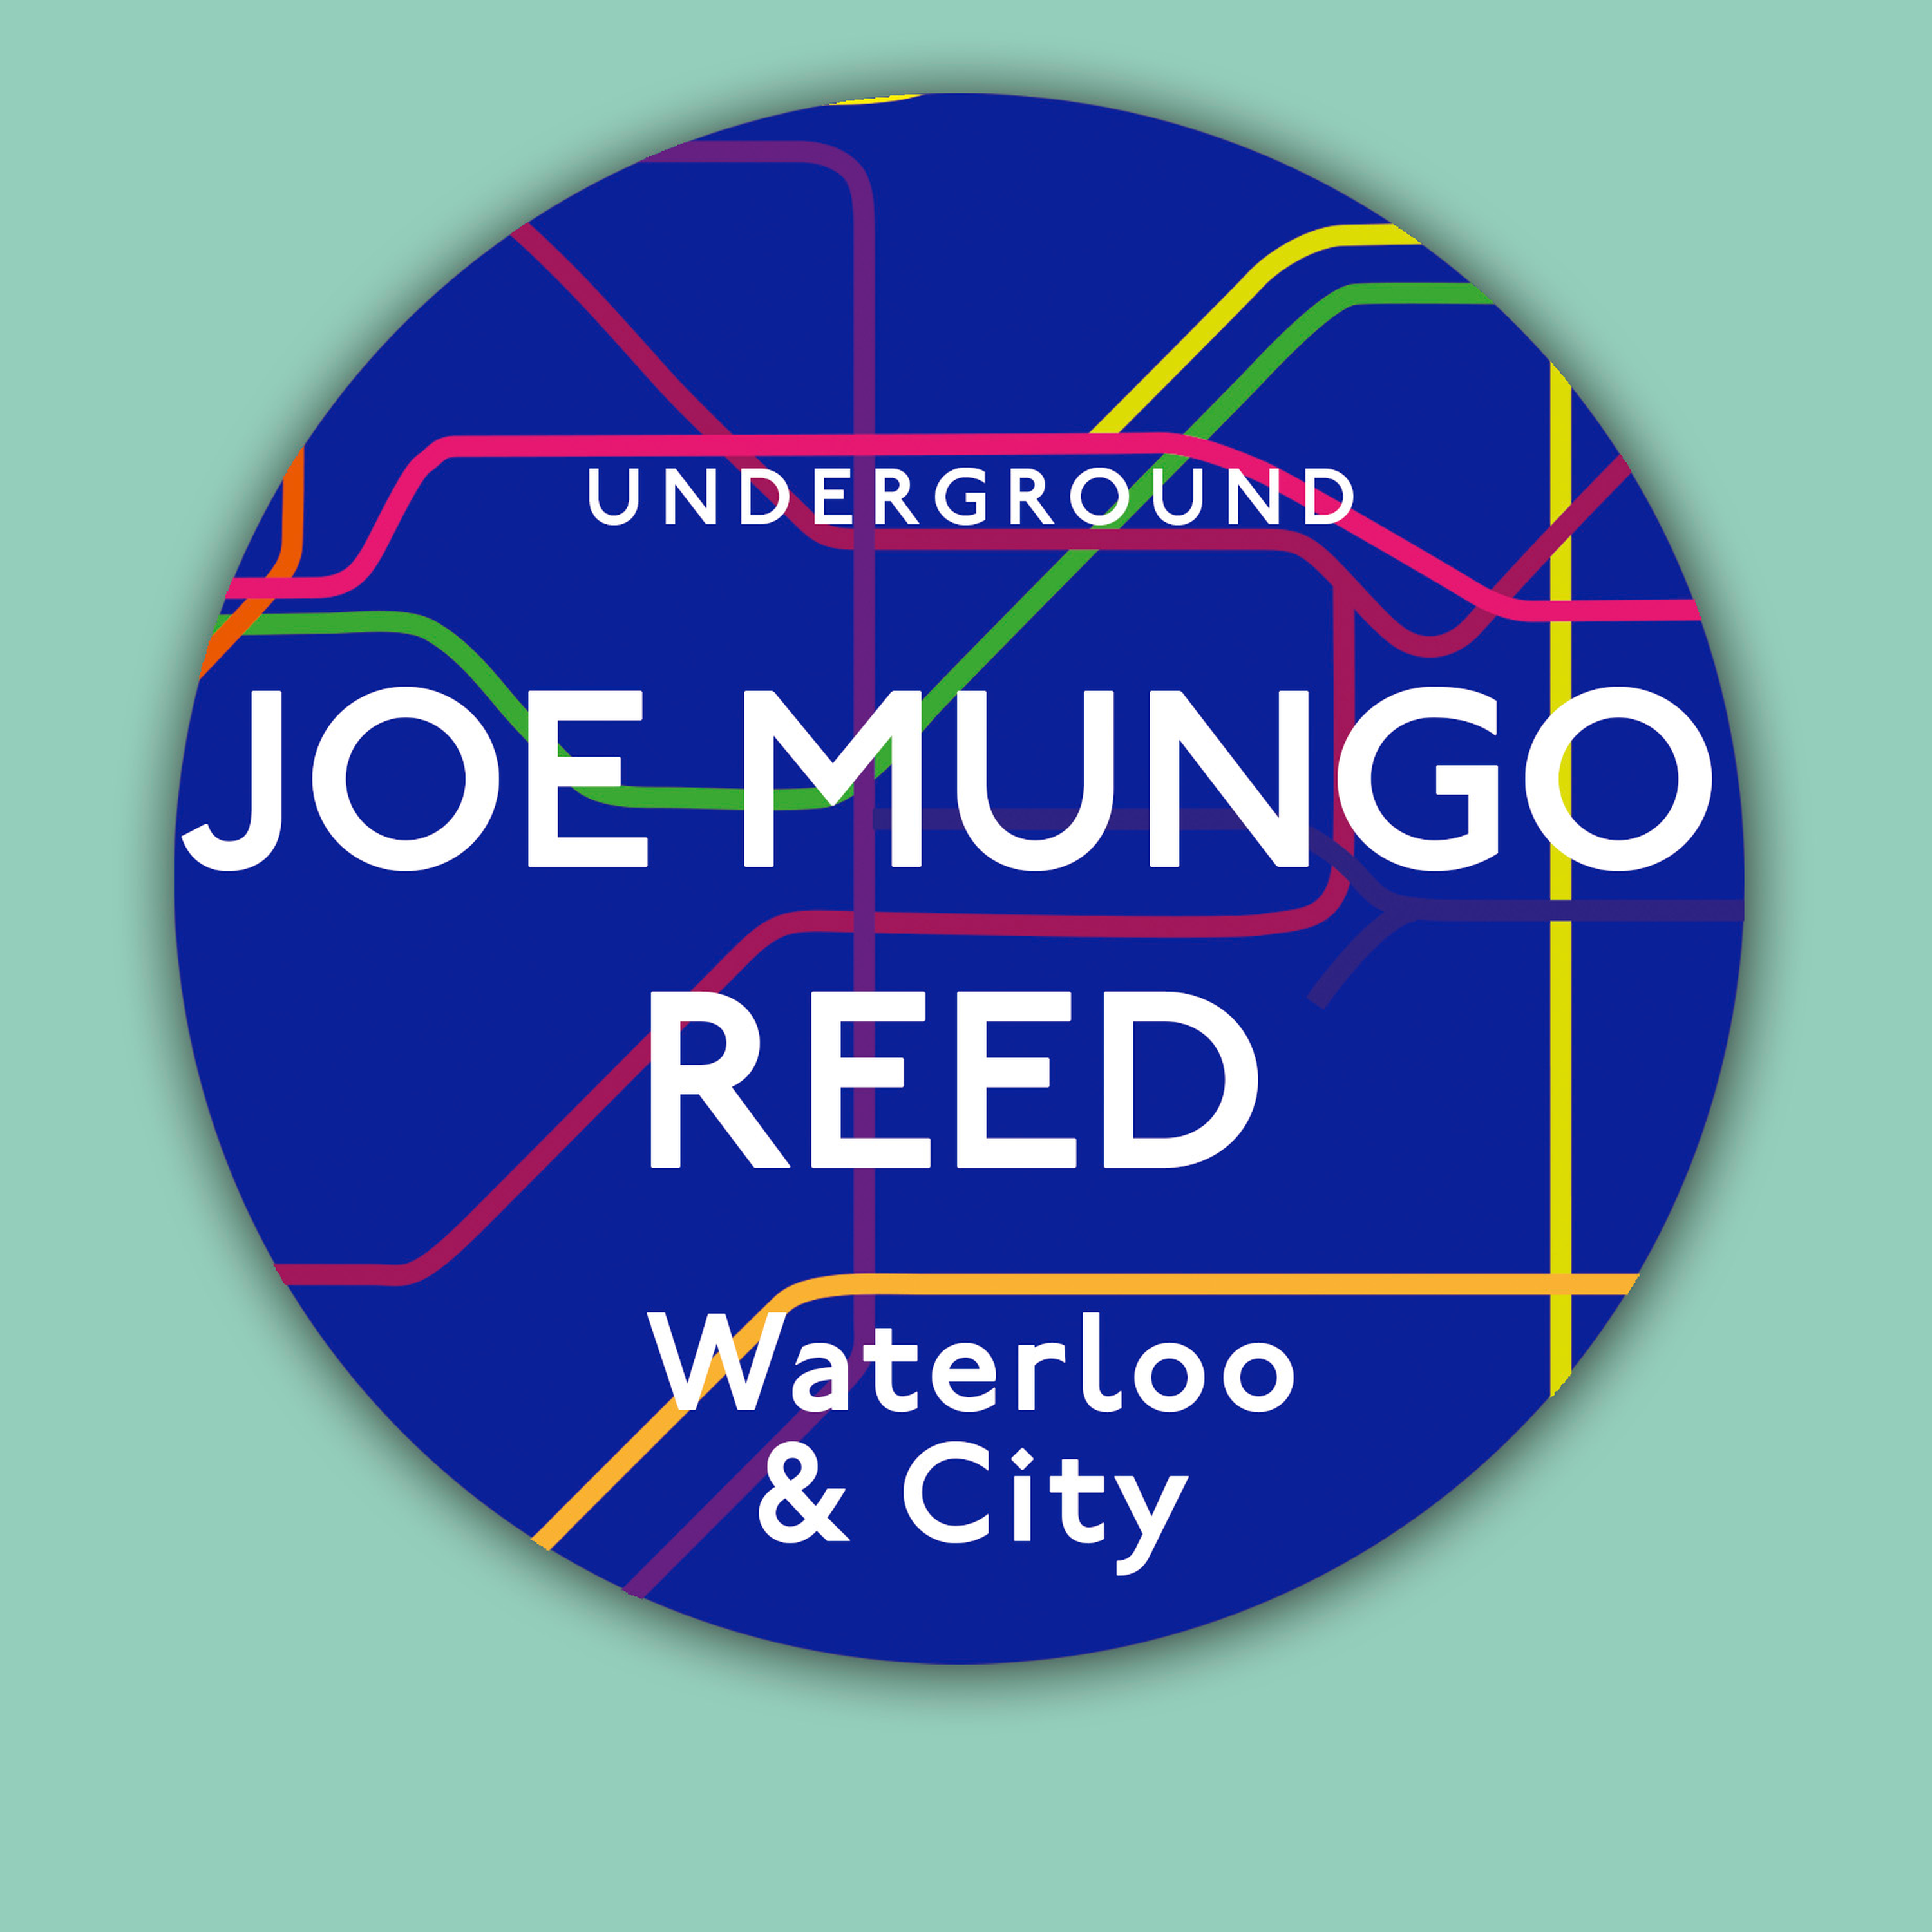 Number Five by Joe Mungo Reed